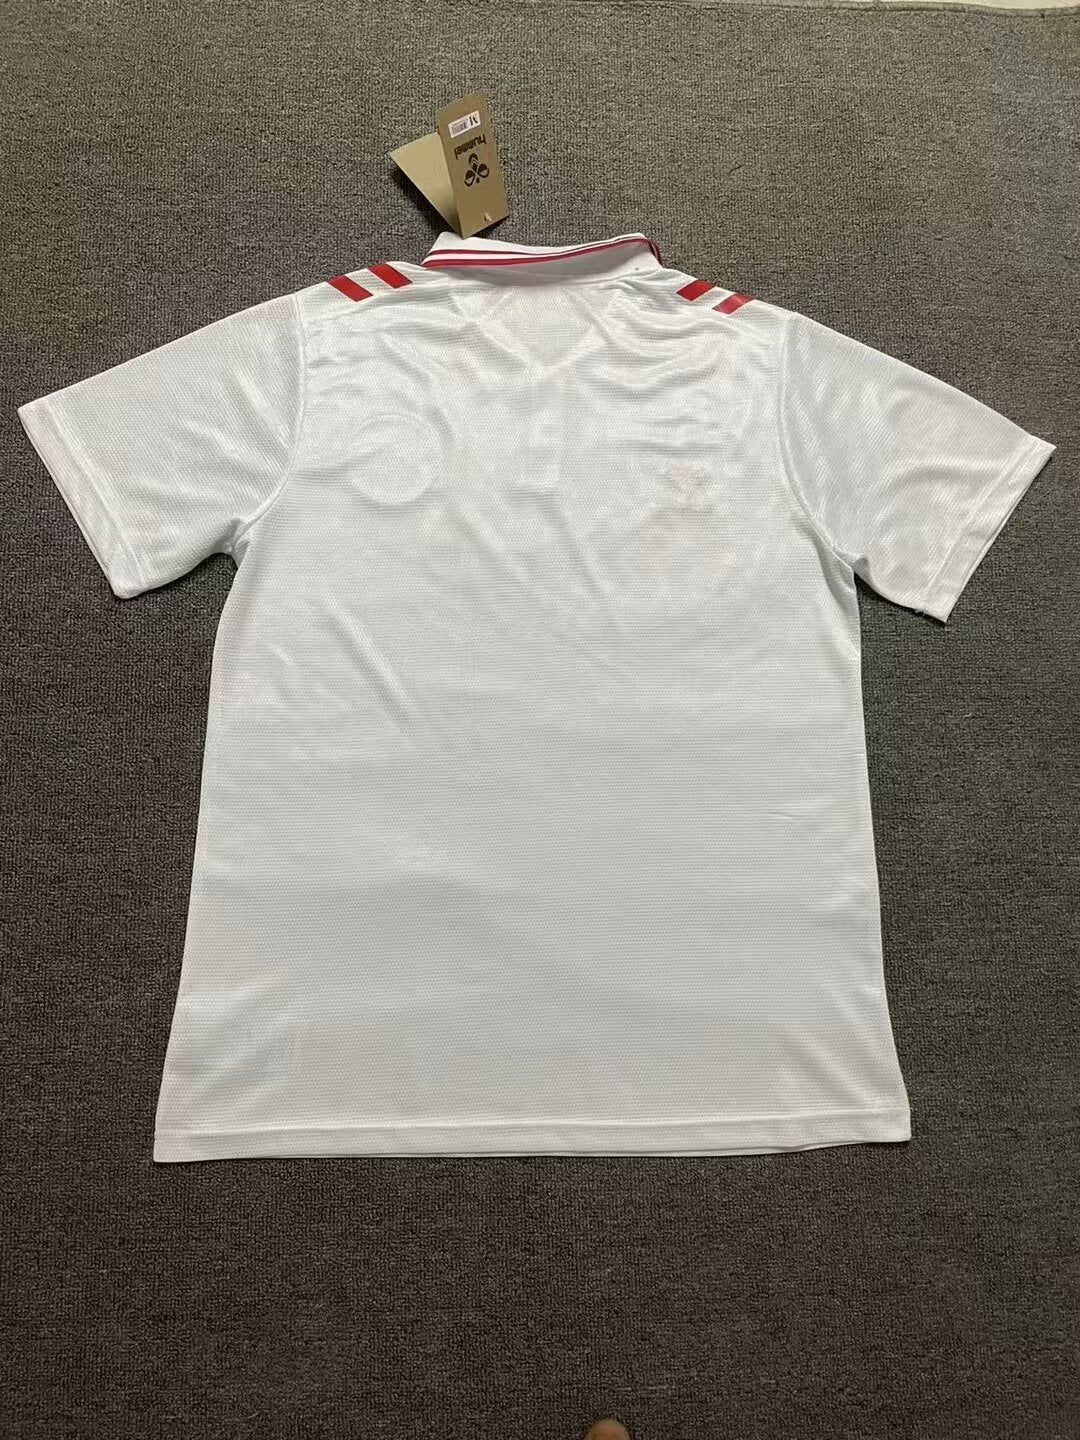 Denmark National Soccer Team 2024/25 Adidas Authentic Away Player Jersey - White (Custom)